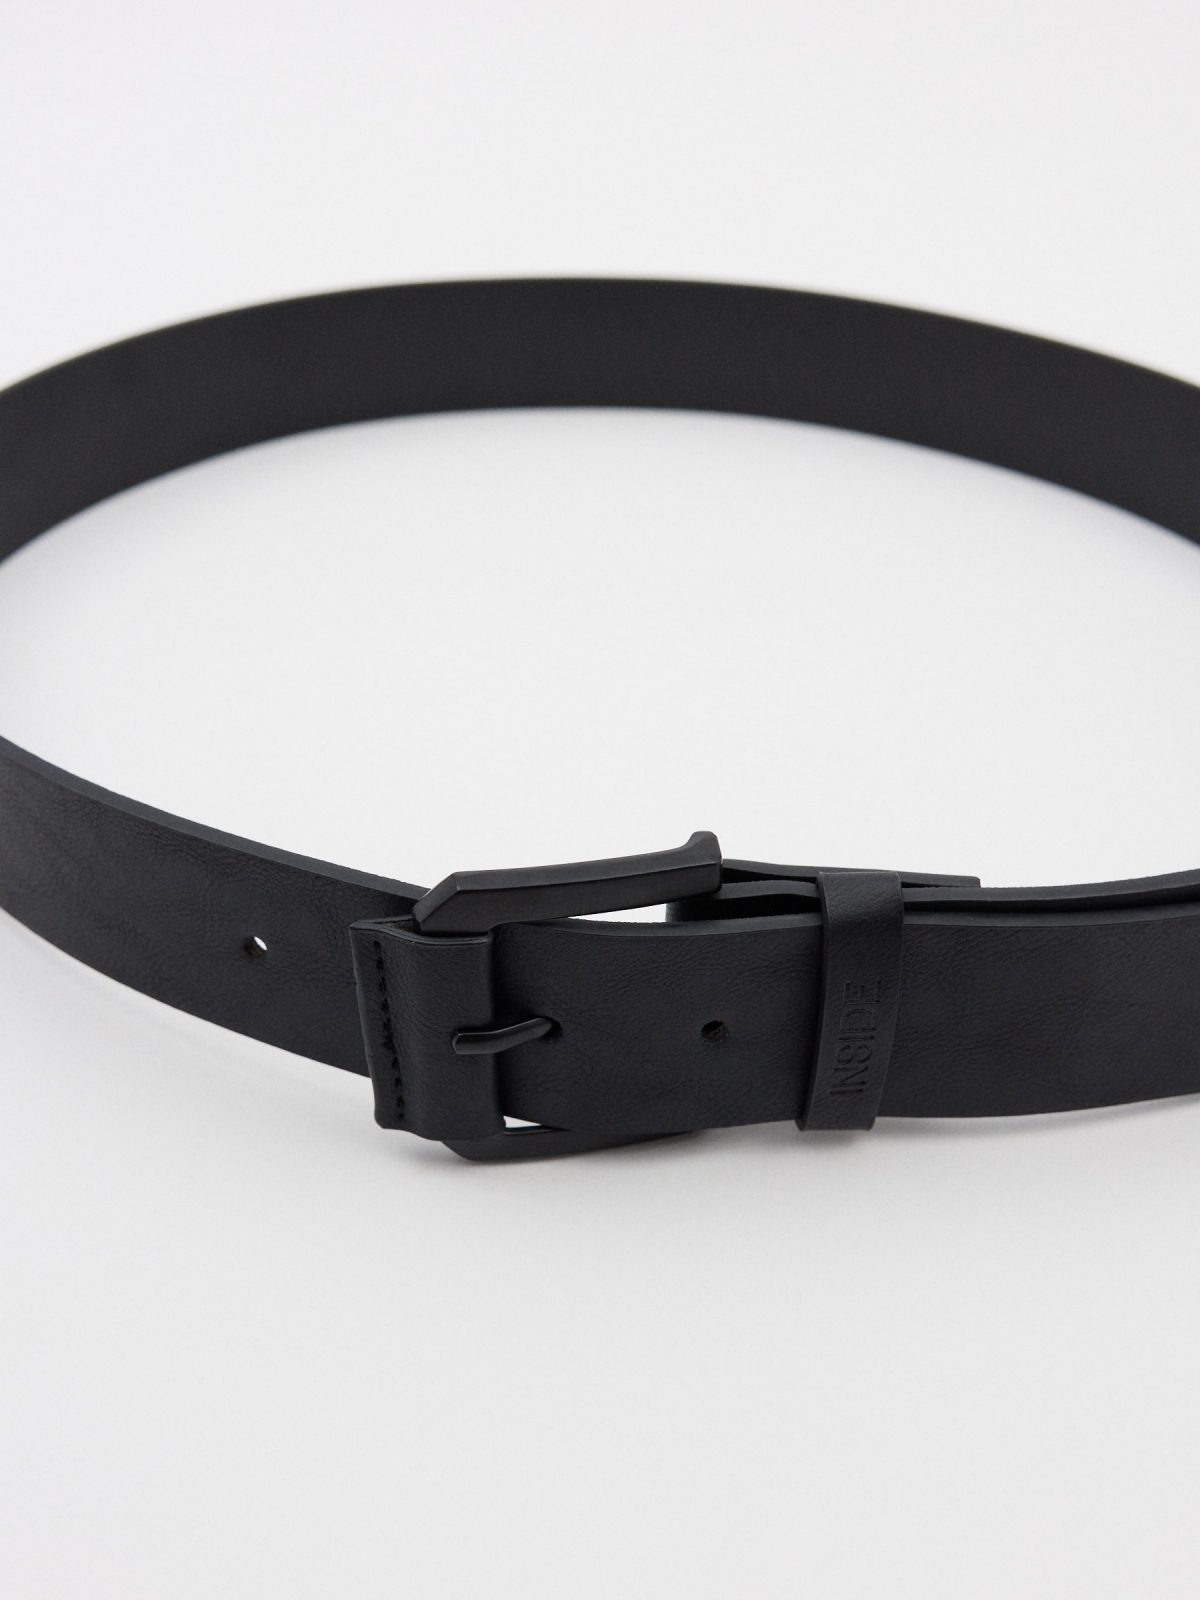 Black leatherette belt buckle